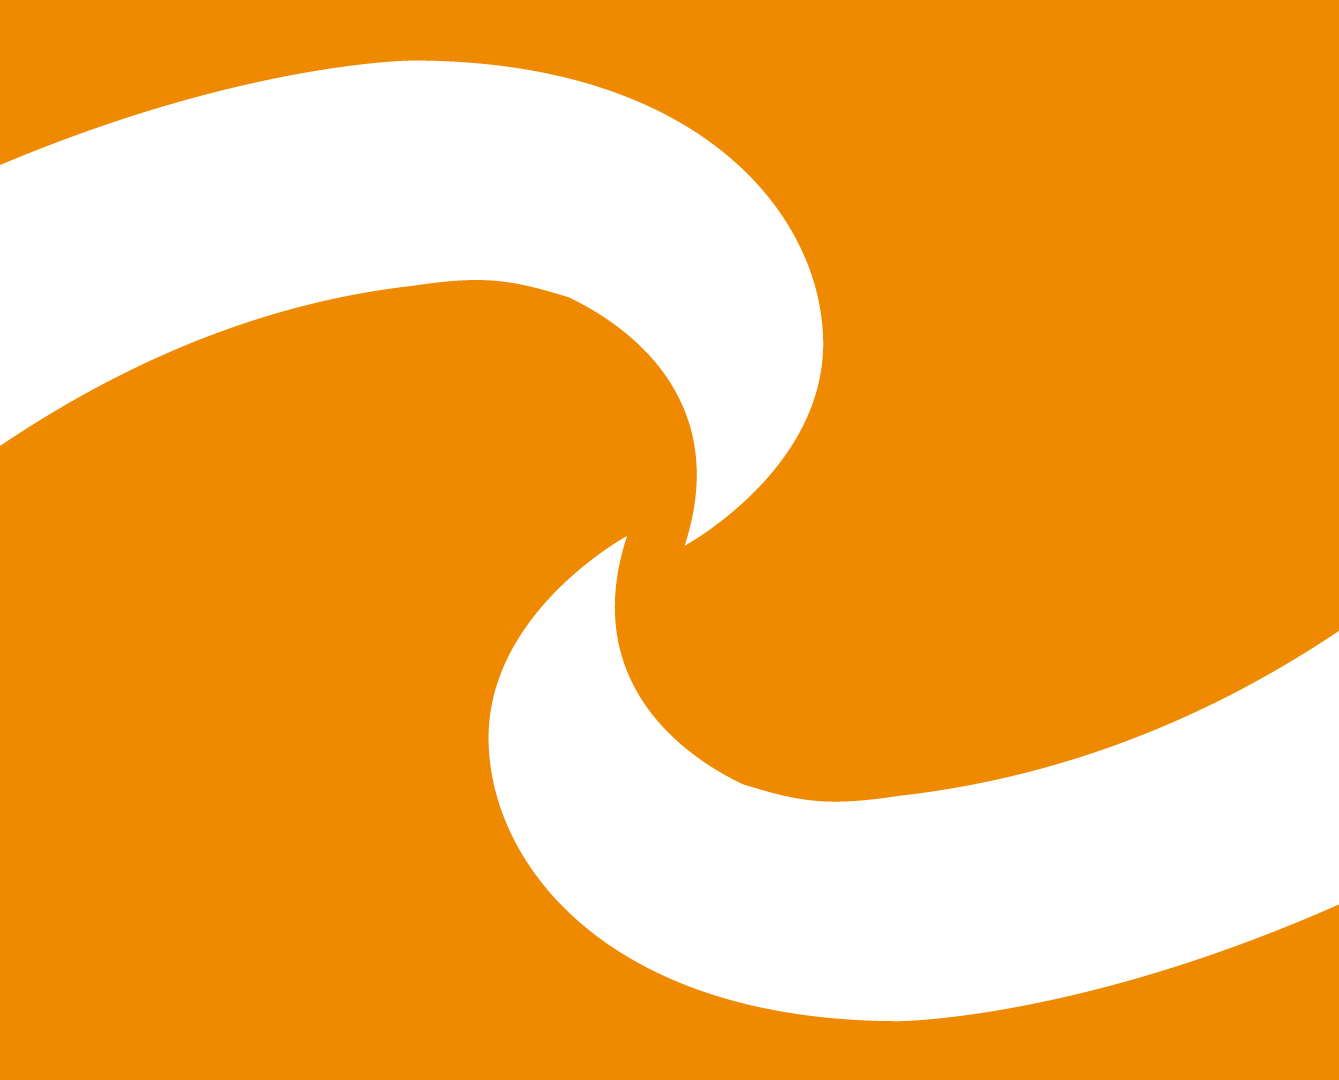 Evolving and realigning orange logo asset